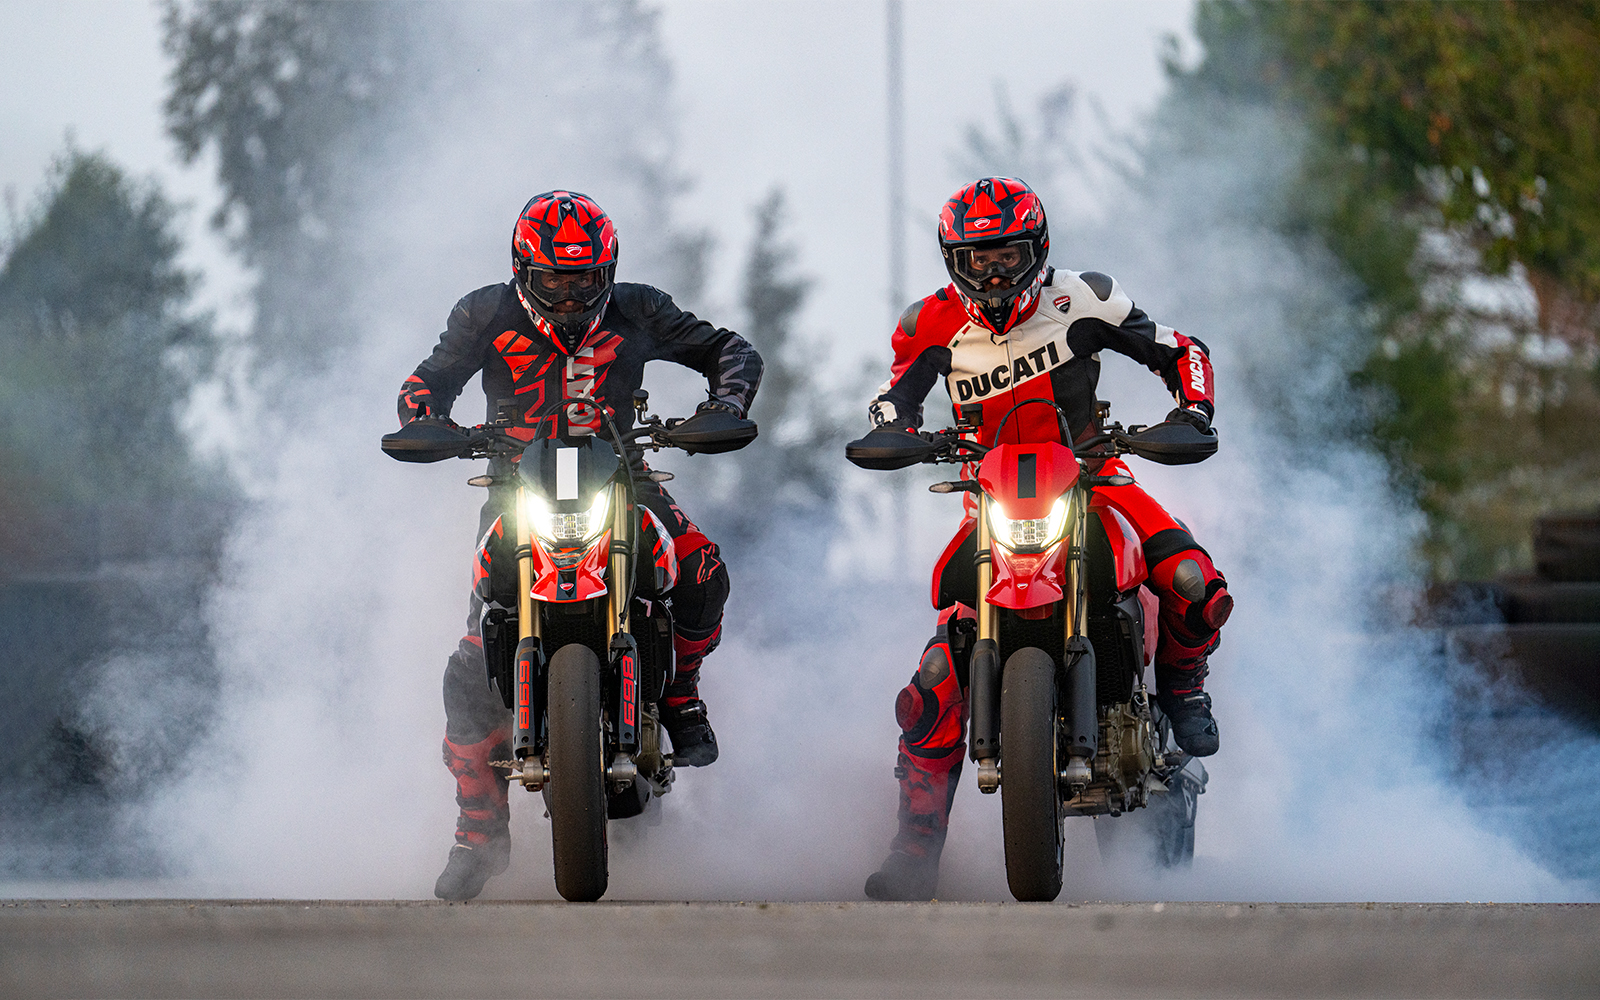 New Ducati Hypermotard 698 Mono - Live. Play. Ride.